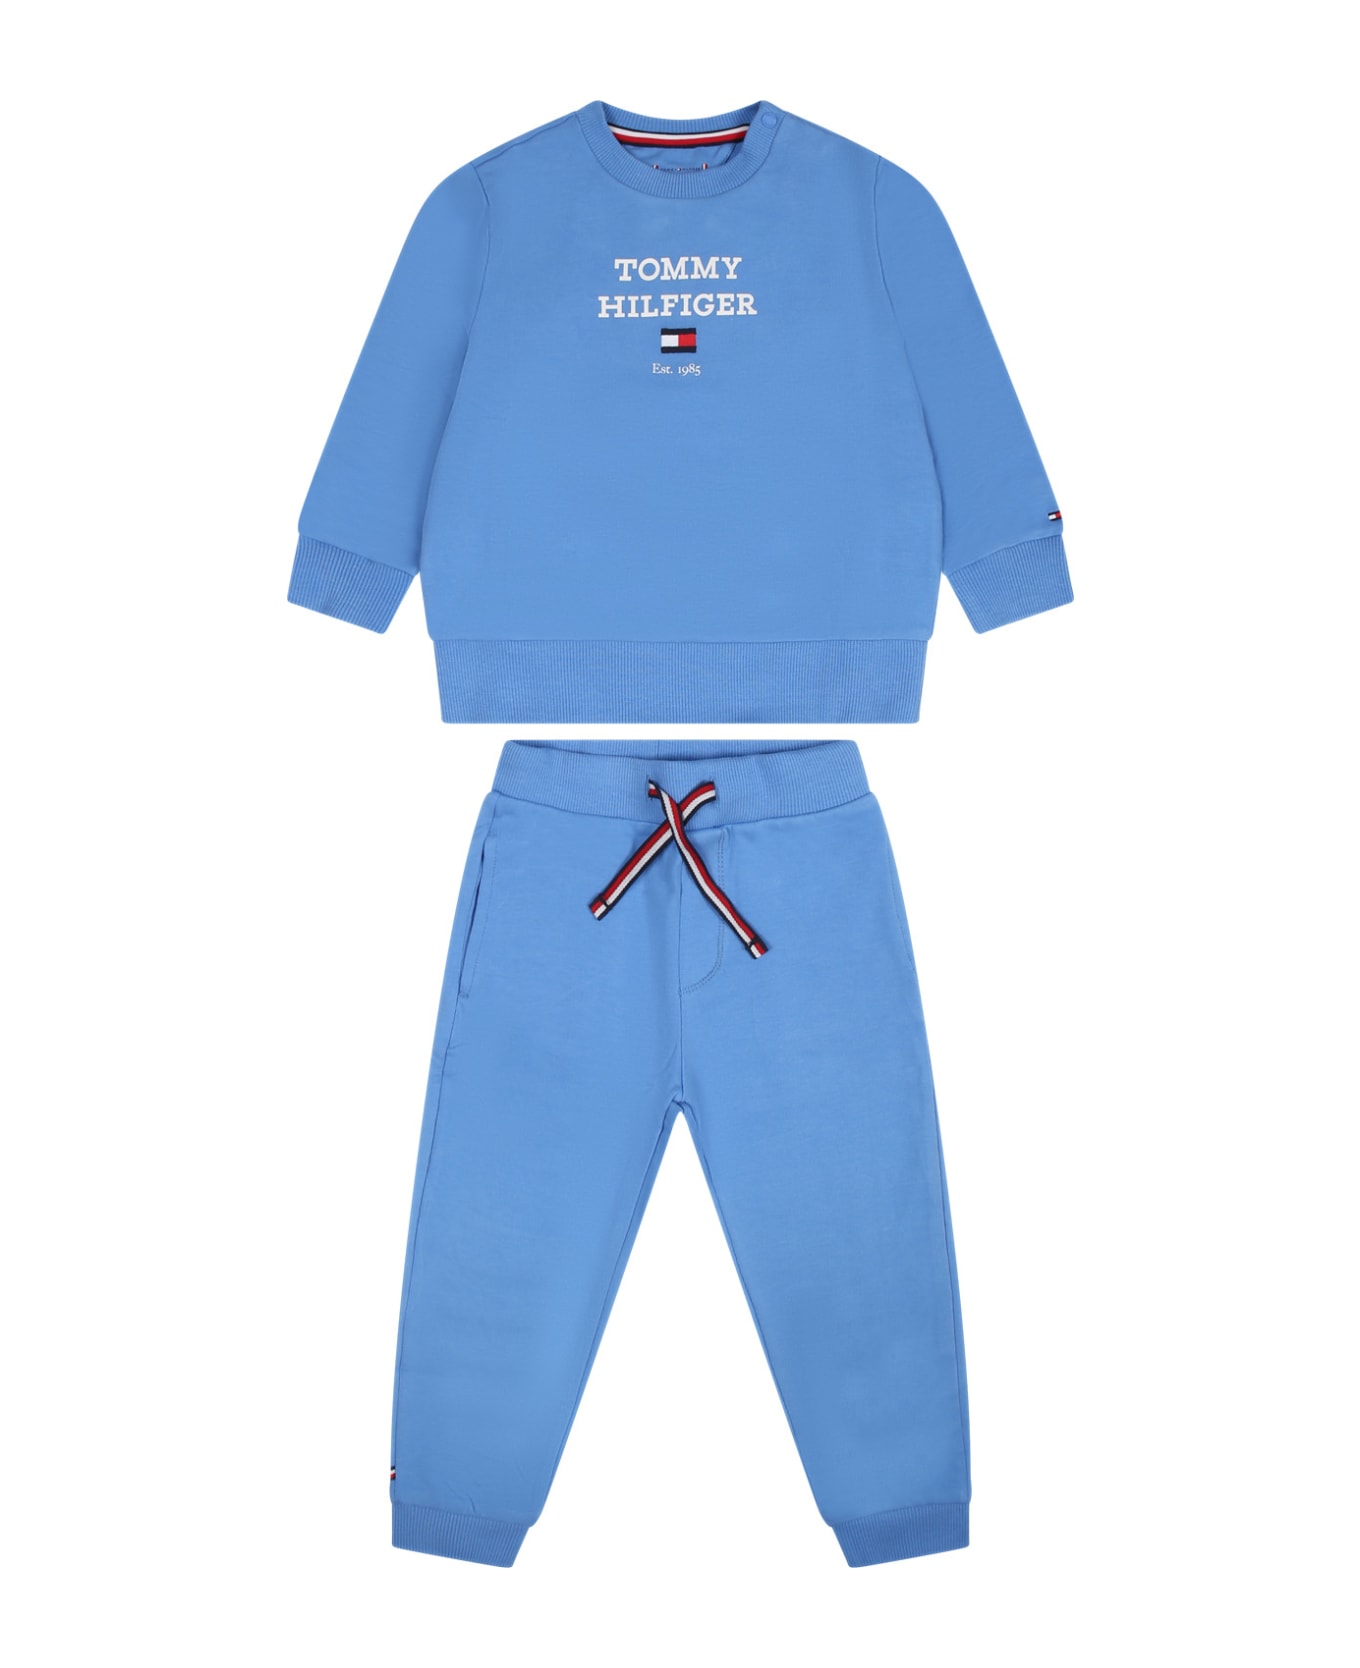 Tommy Hilfiger Light Blue Set For Baby Boy With Logo - Light Blue